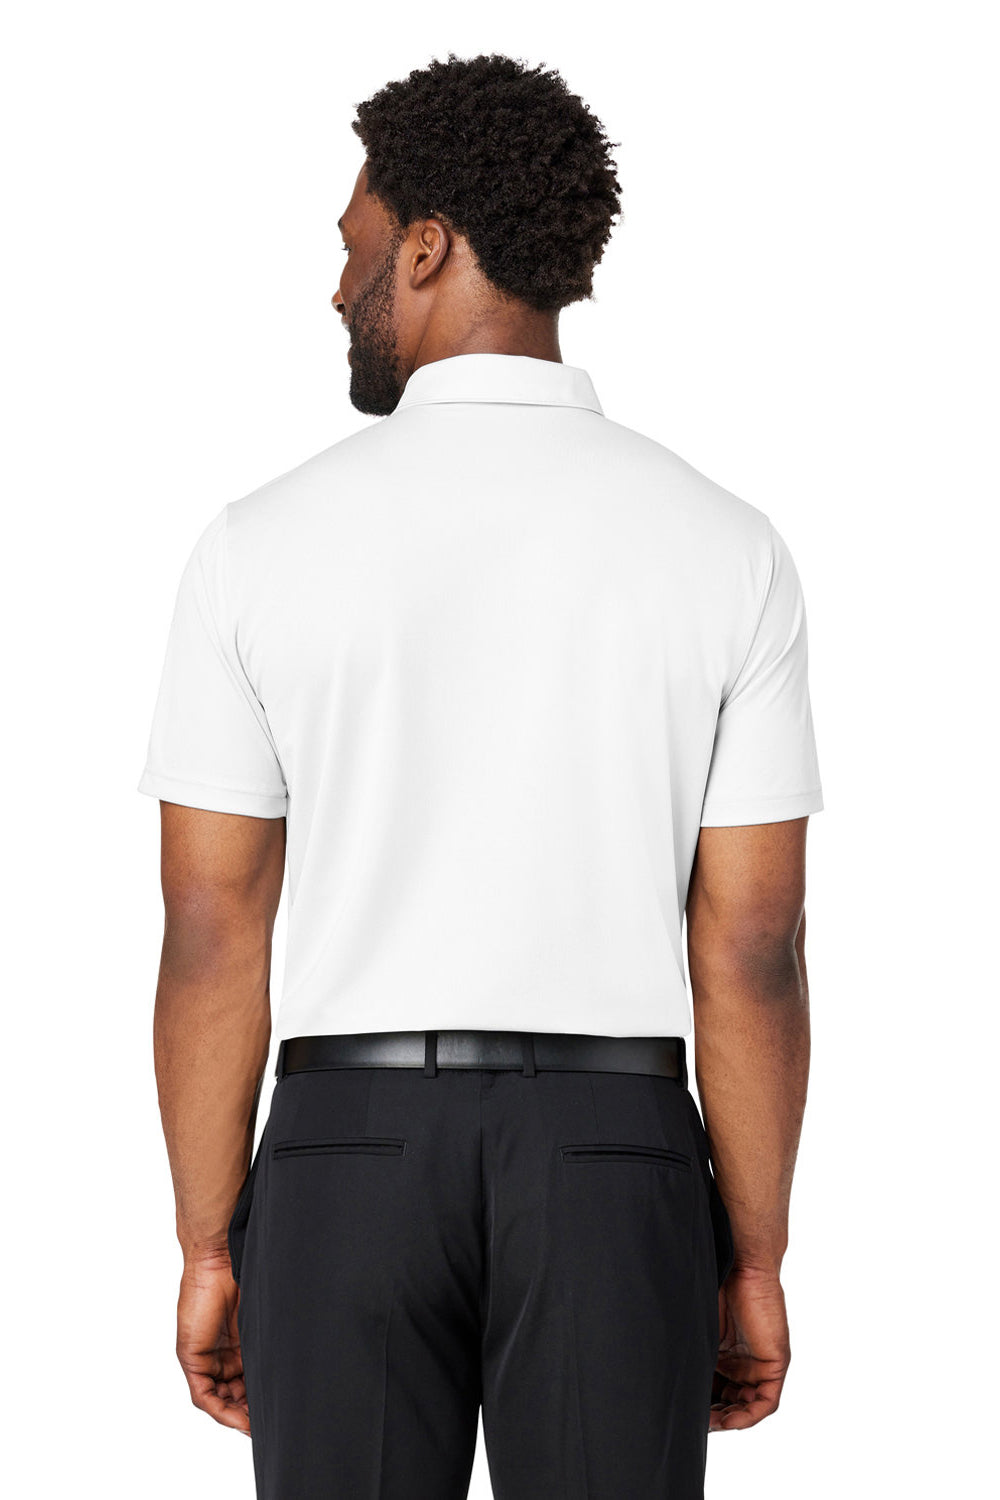 Puma 599120 Mens Gamer Short Sleeve Polo Shirt Bright White Back